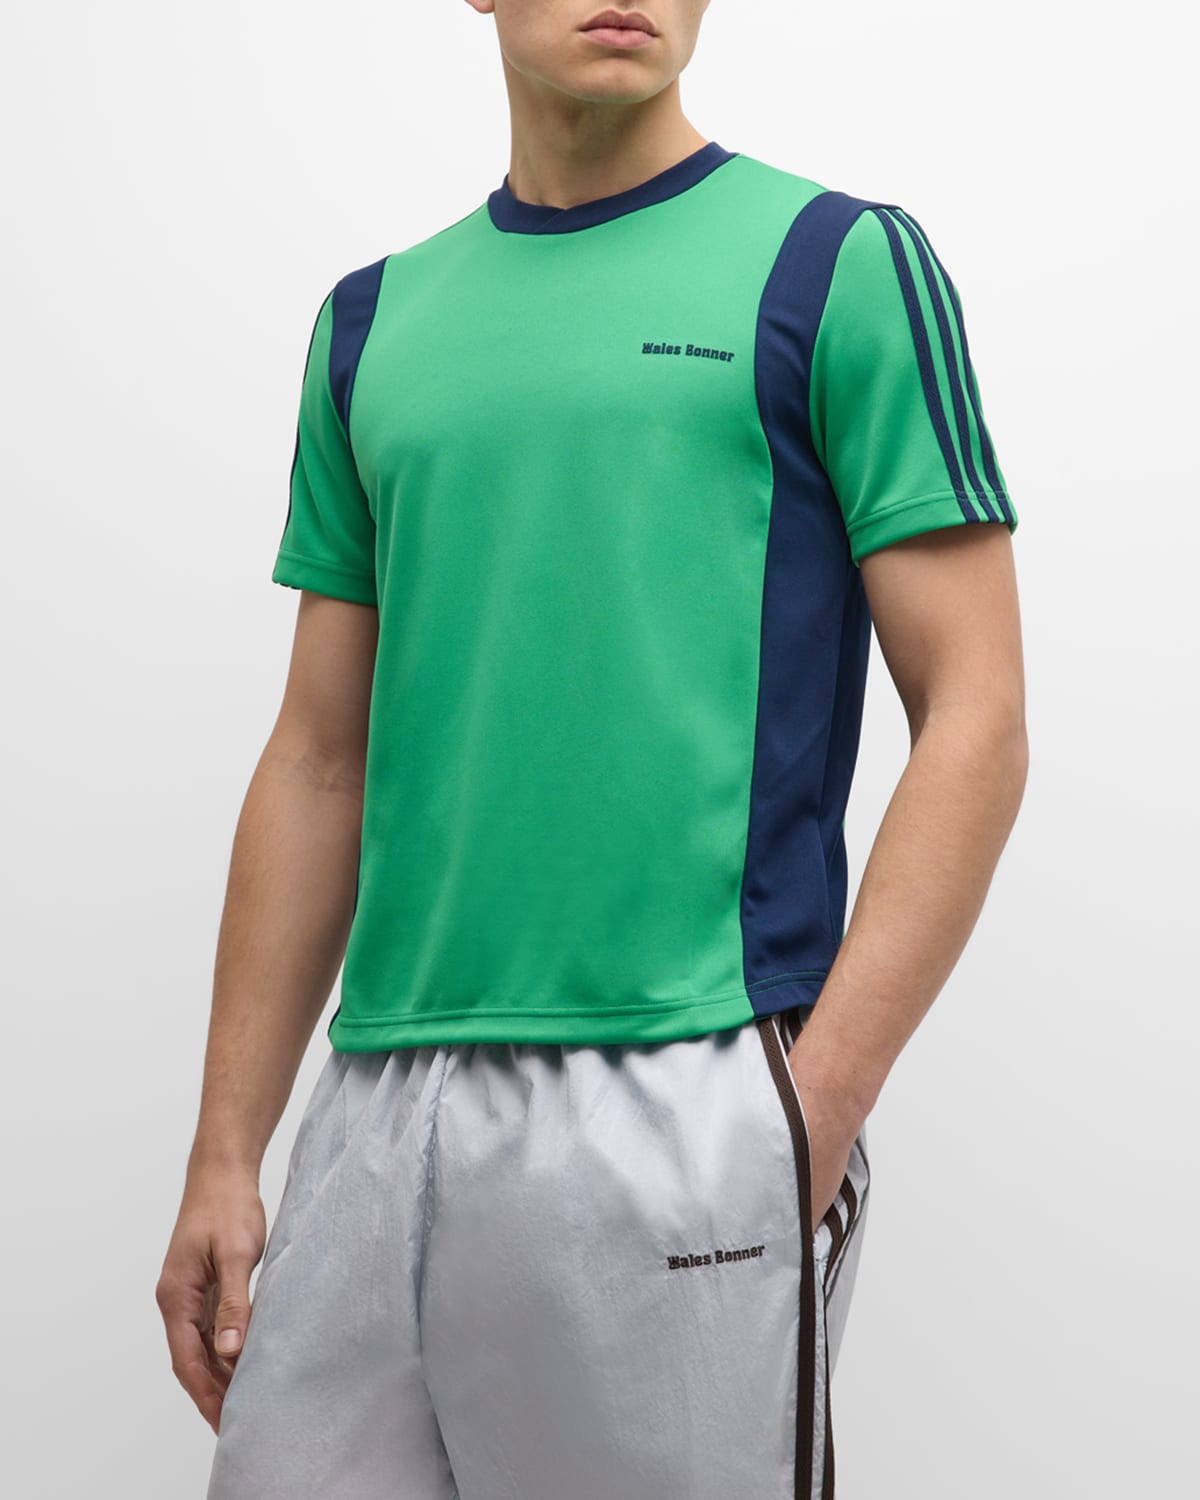 Adidas Originals X Wales Bronner Men's Football Shirt In Vivgrn